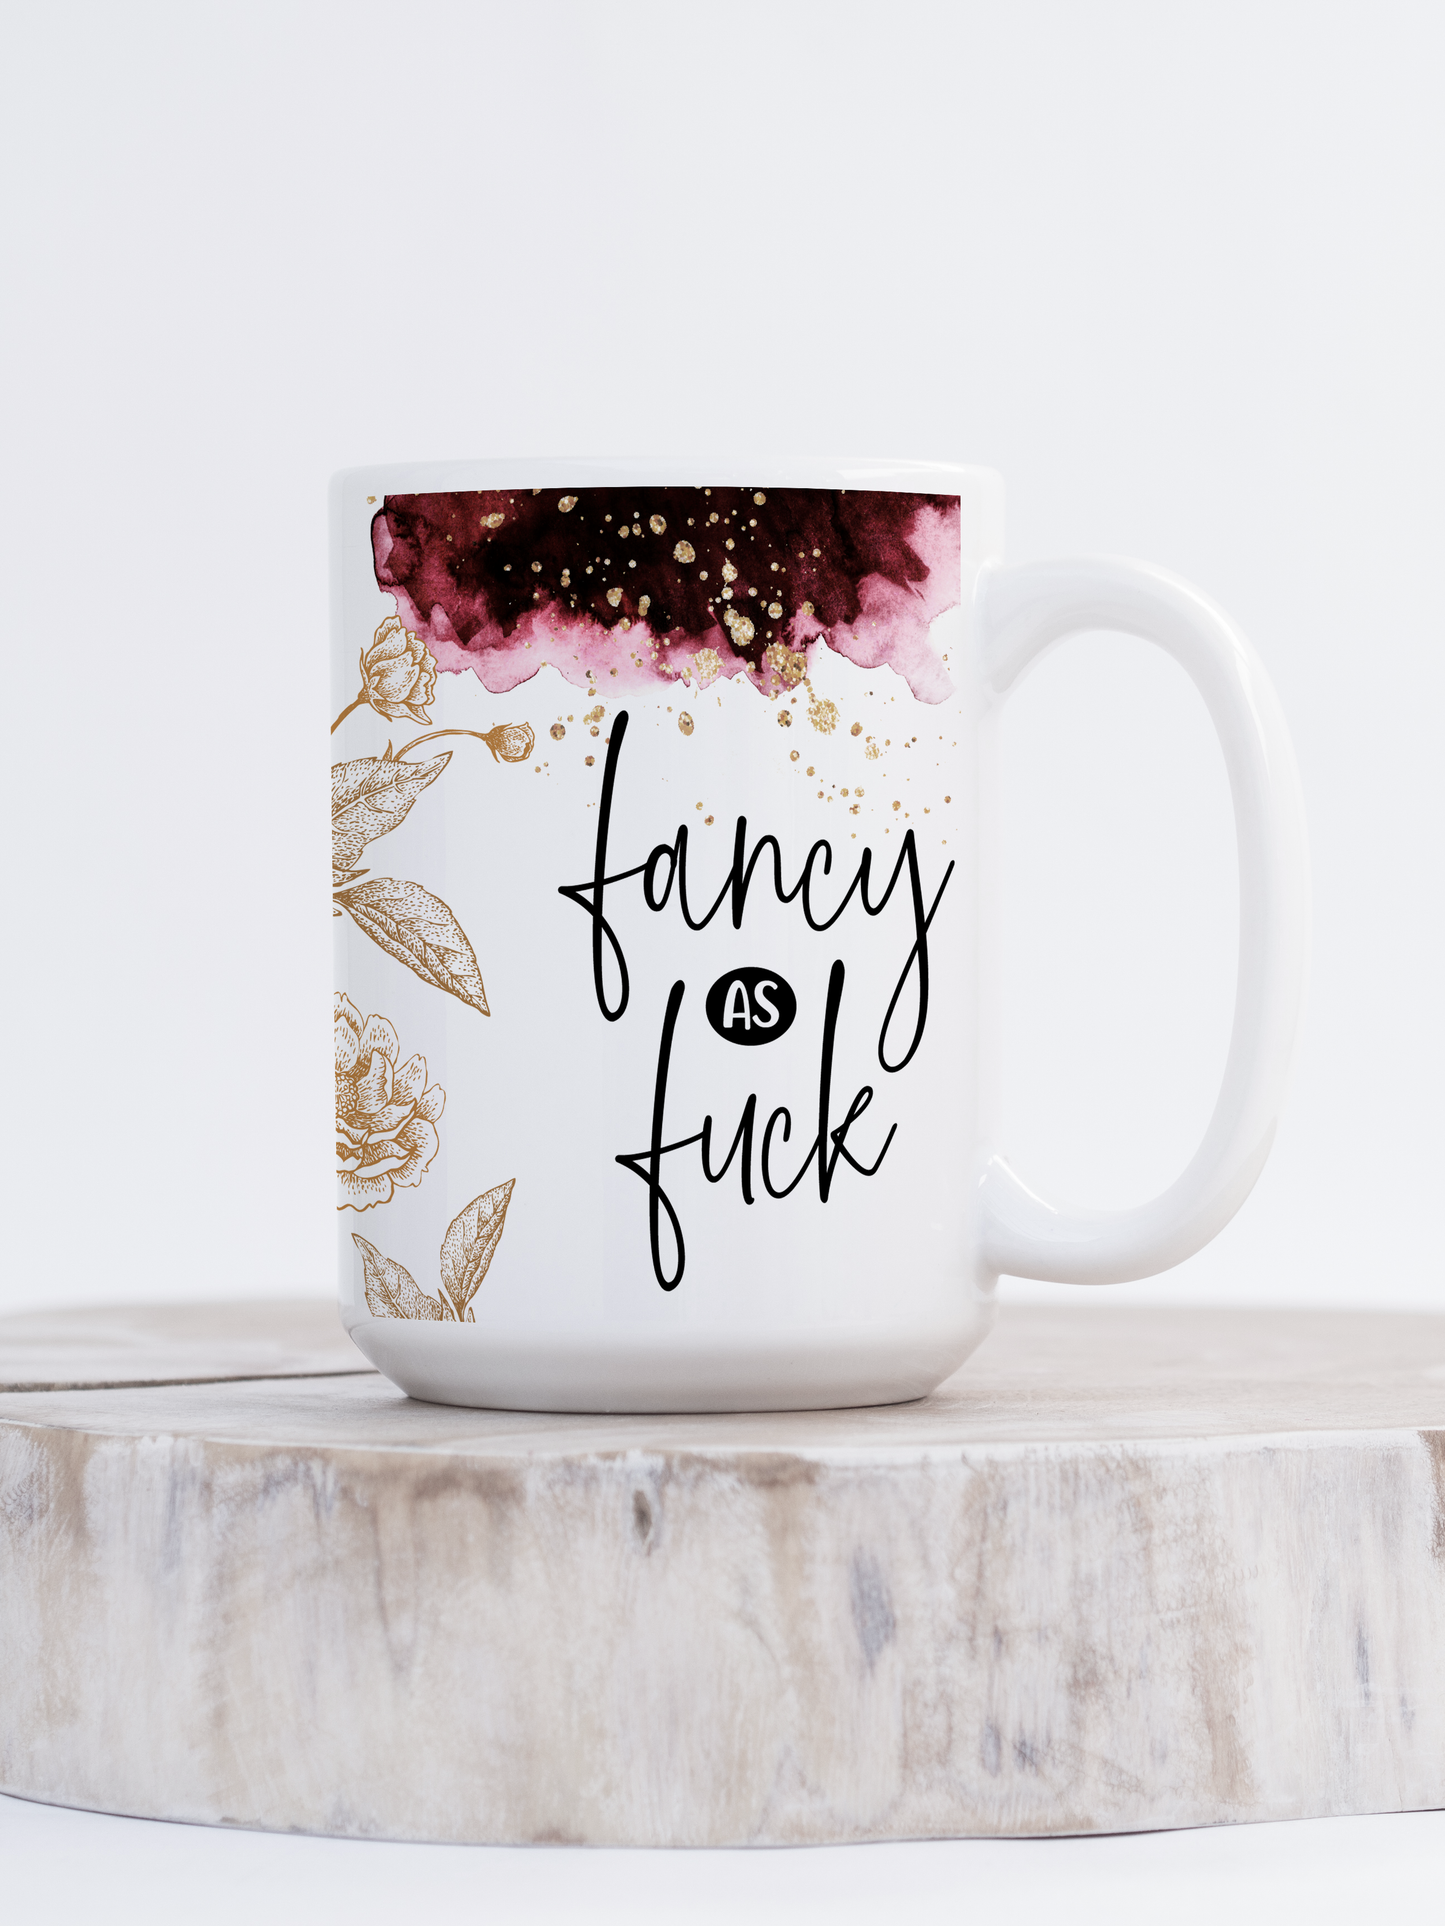 Fancy as Fuck Ceramic Mug